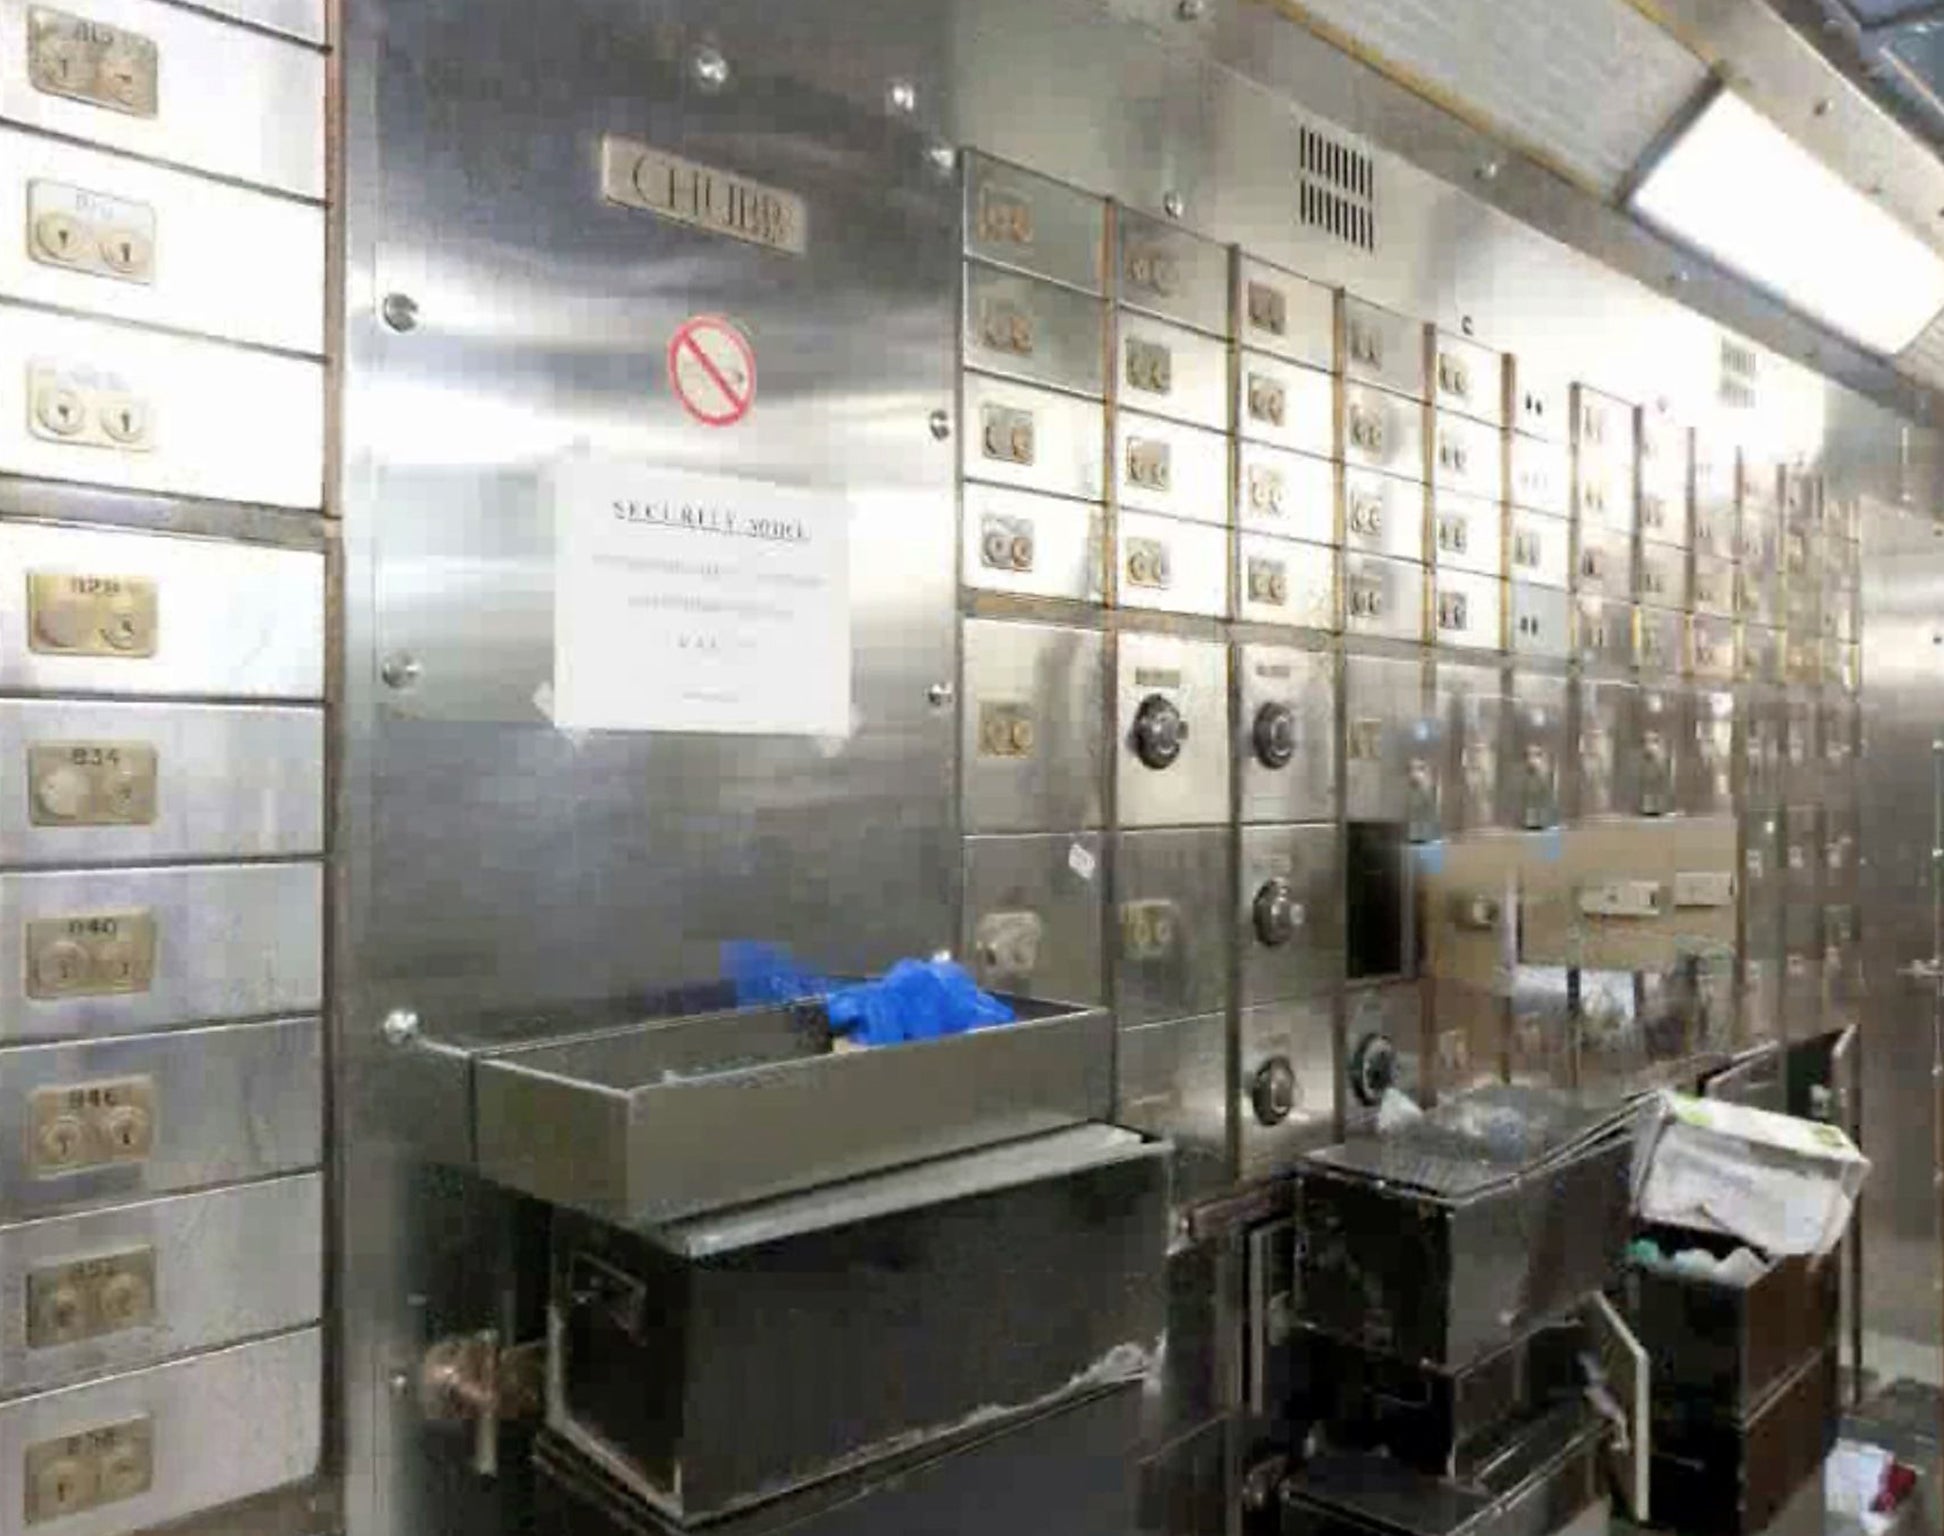 Hatton Garden heist: Inside the vaults showing the raided safe deposit boxes